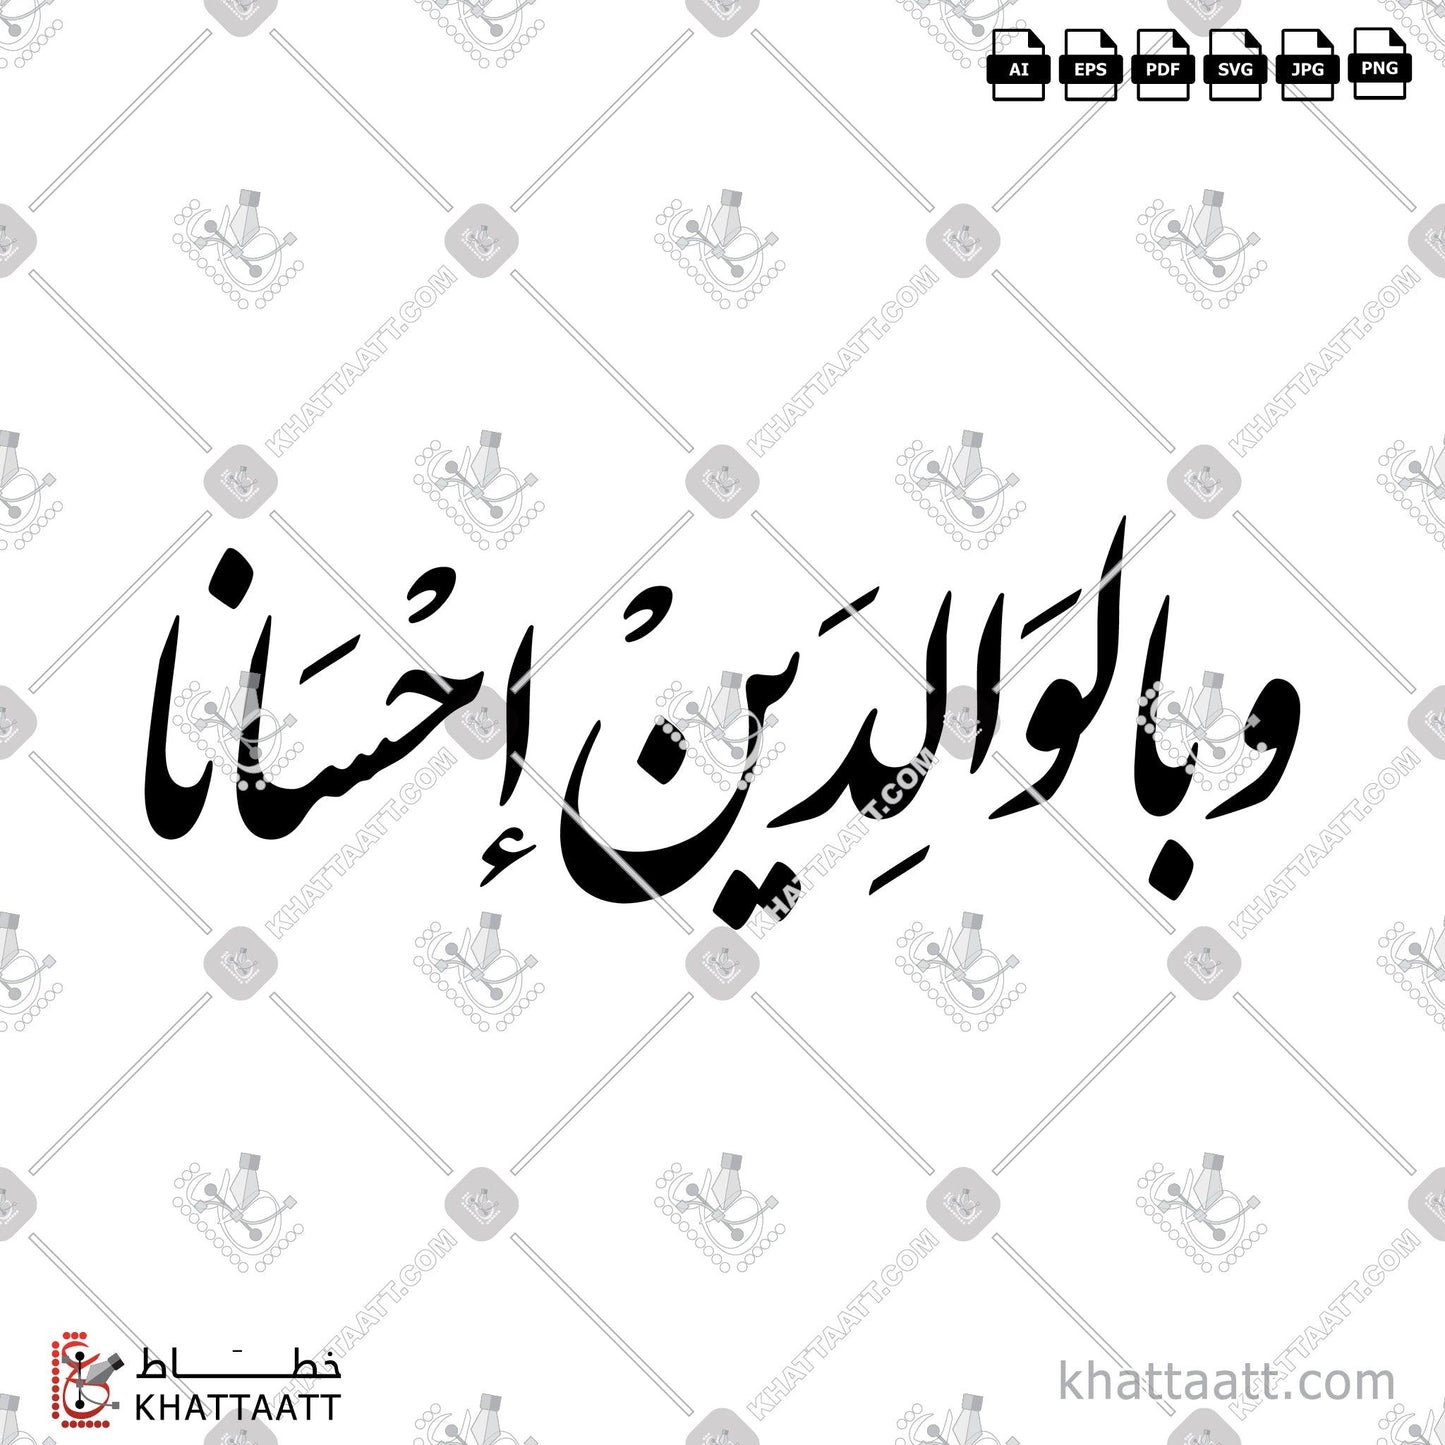 Download Arabic Calligraphy of وبالوالدين إحسانا in Farsi - الخط الفارسي in vector and .png